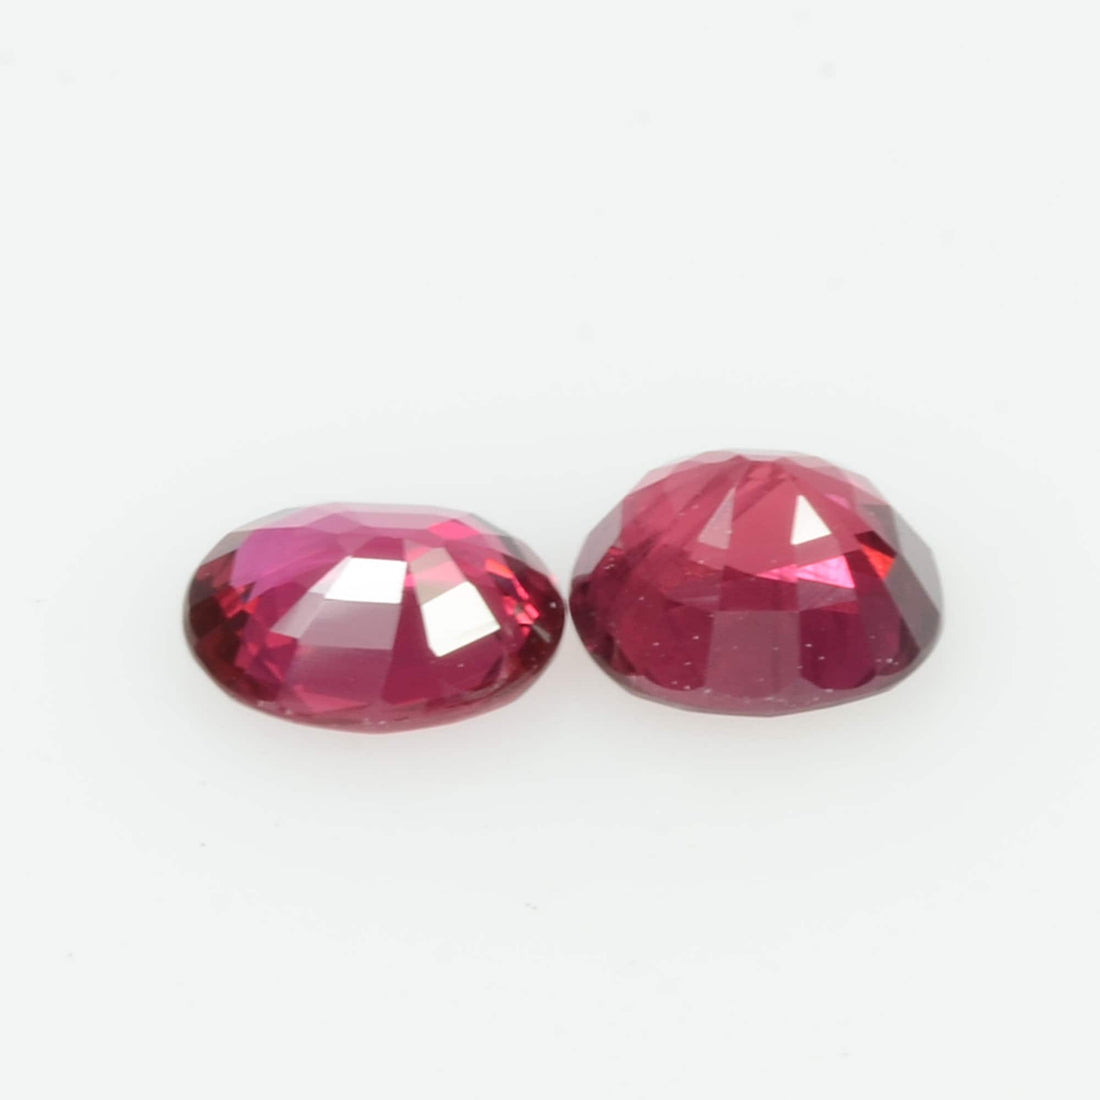 Pair Natural Burma Ruby Loose Gemstone Oval Cut